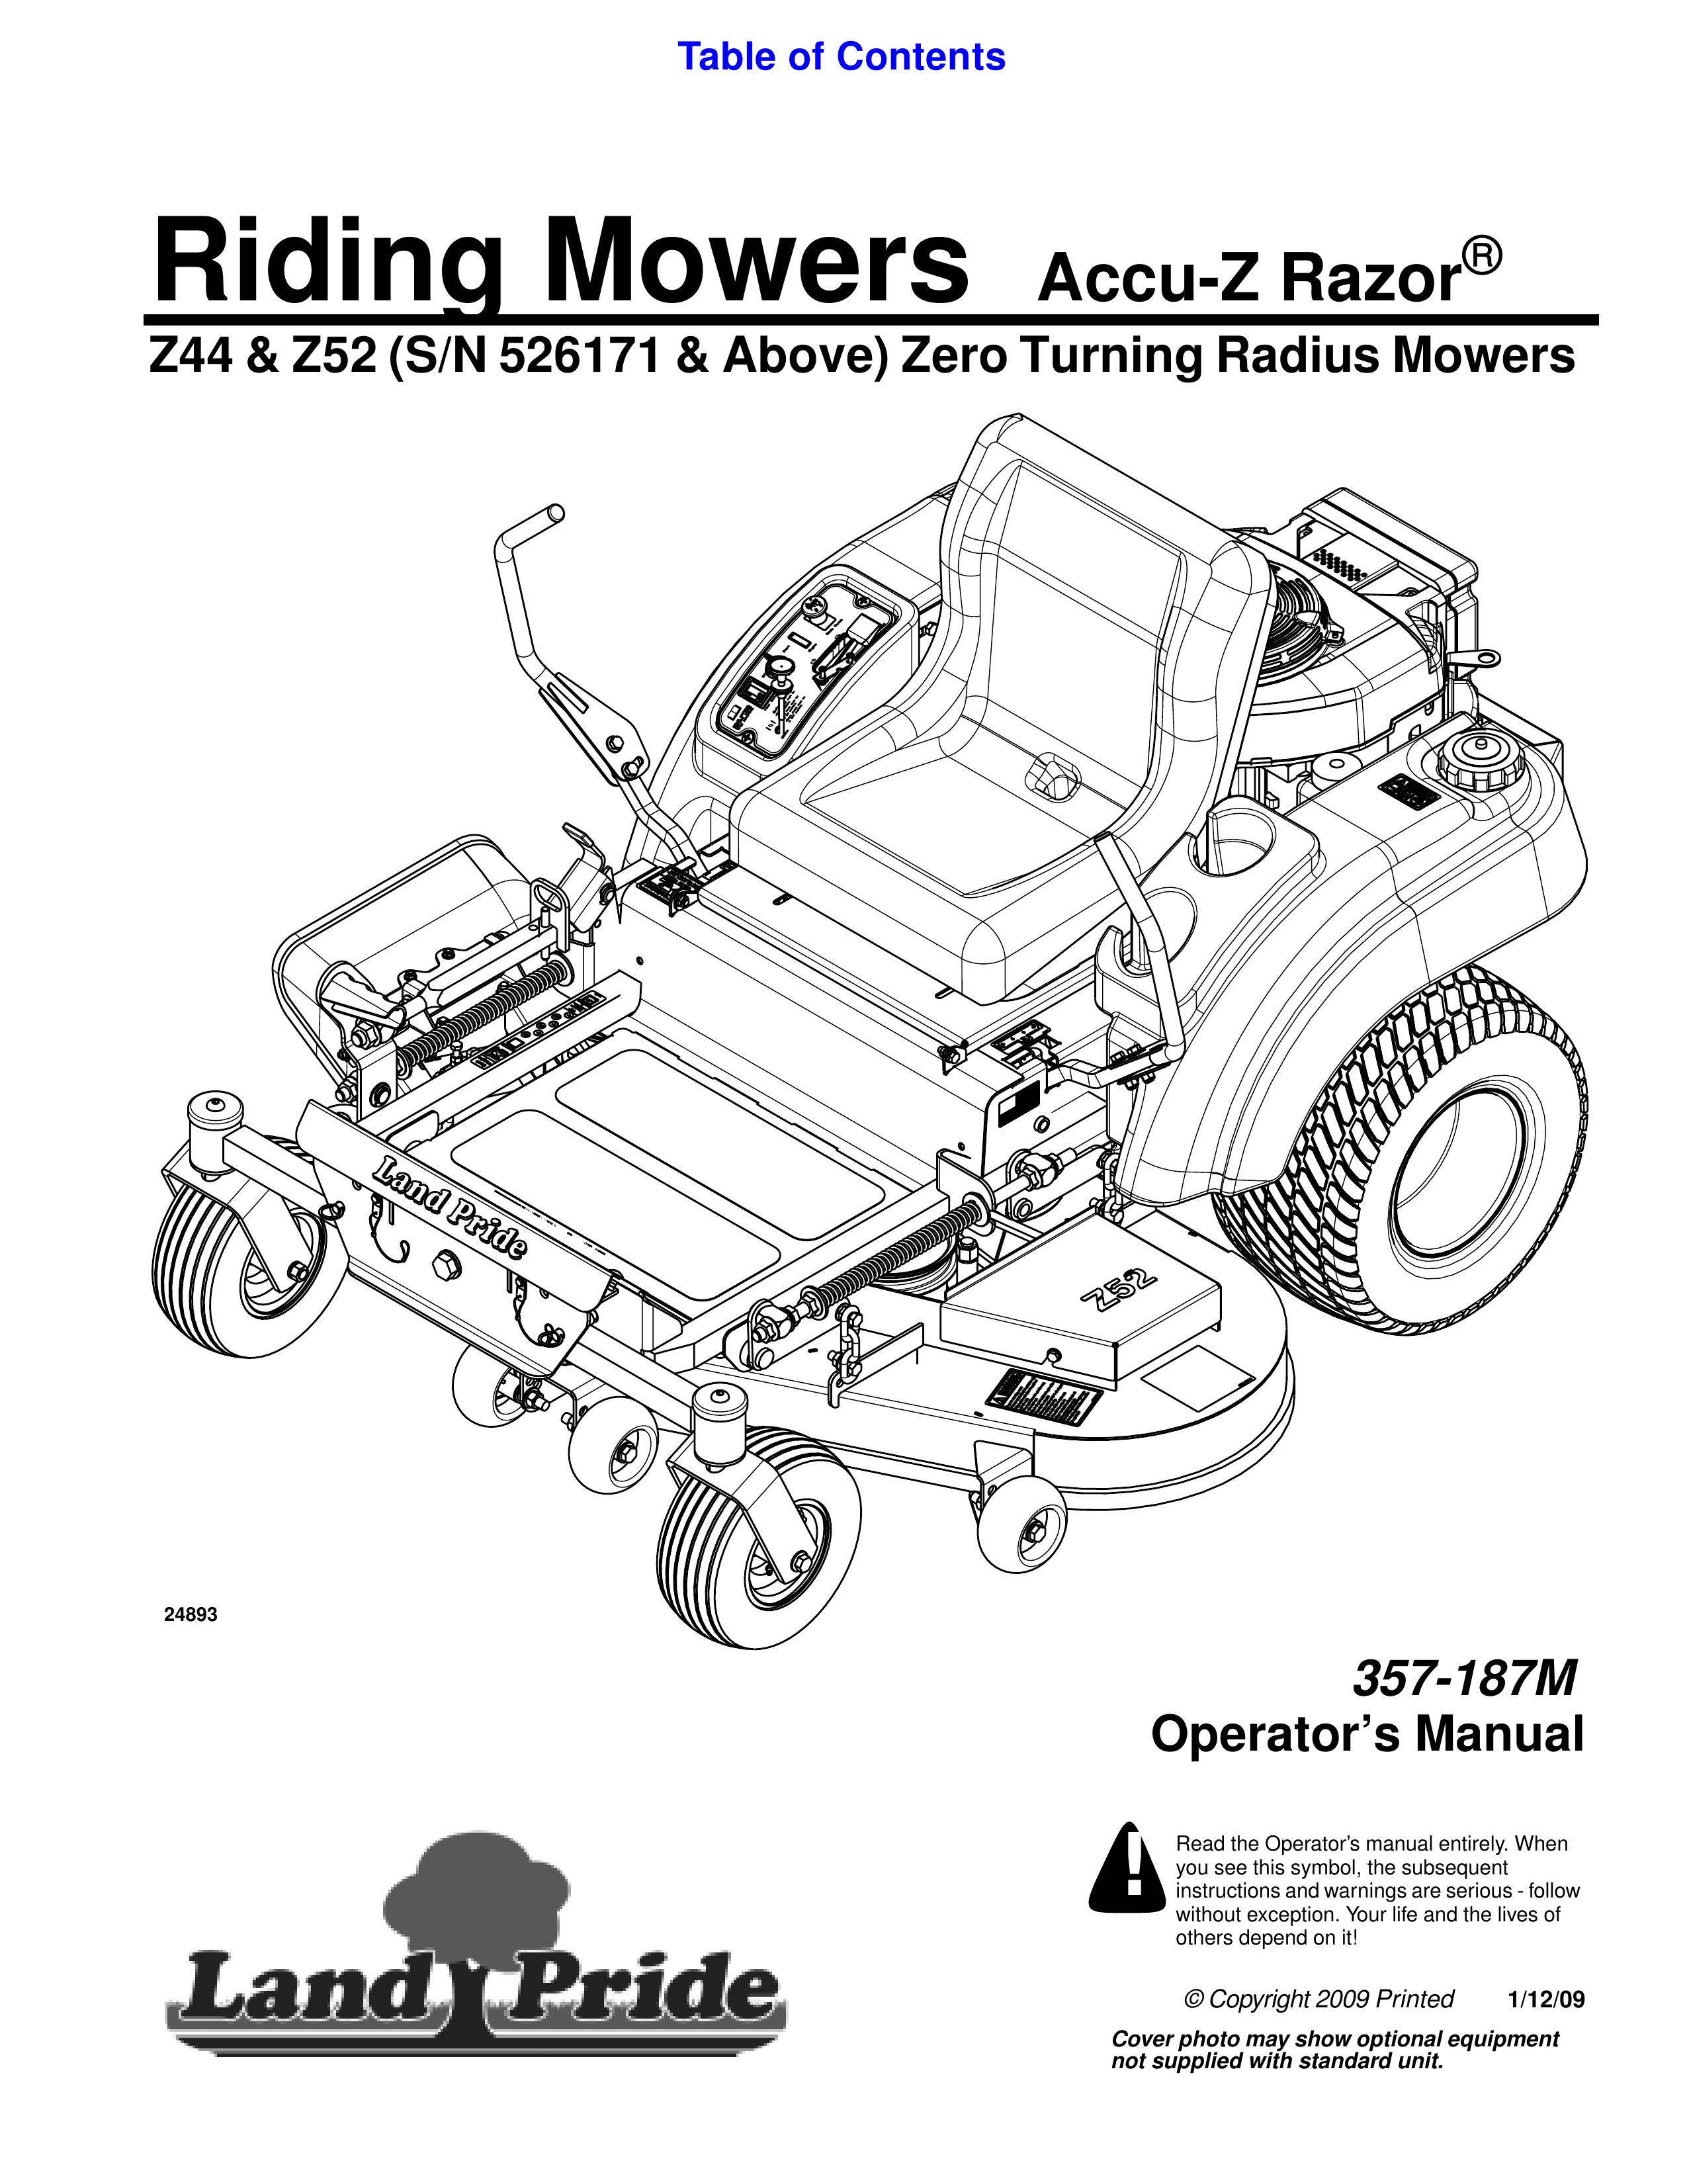 Land Pride 357-187M Lawn Mower User Manual